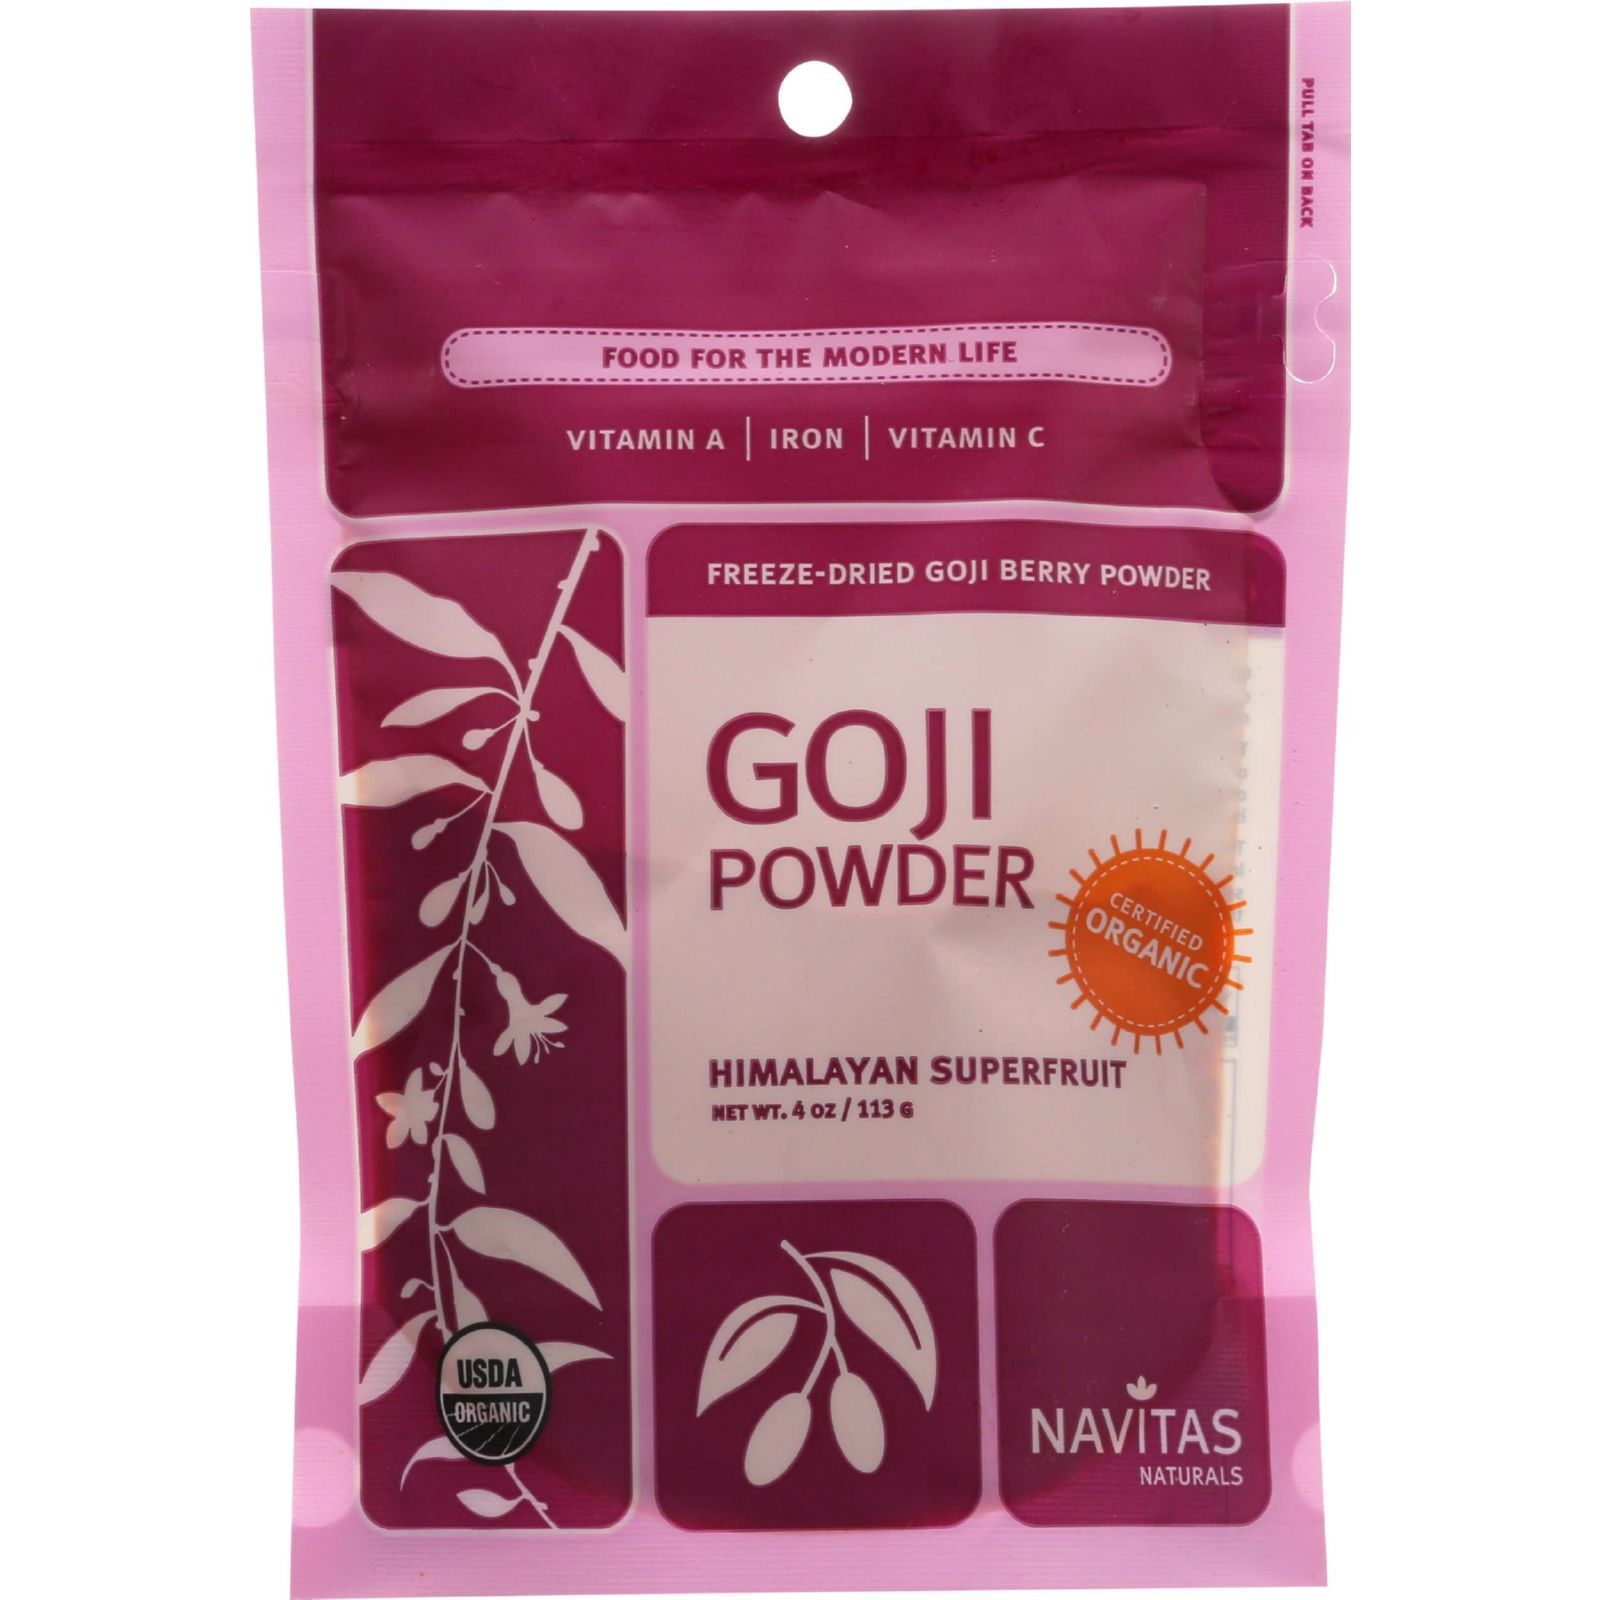 Navitas Naturals Goji Berry Powder - Organic - Freeze-Dried - 4 oz - 12개 묶음상품